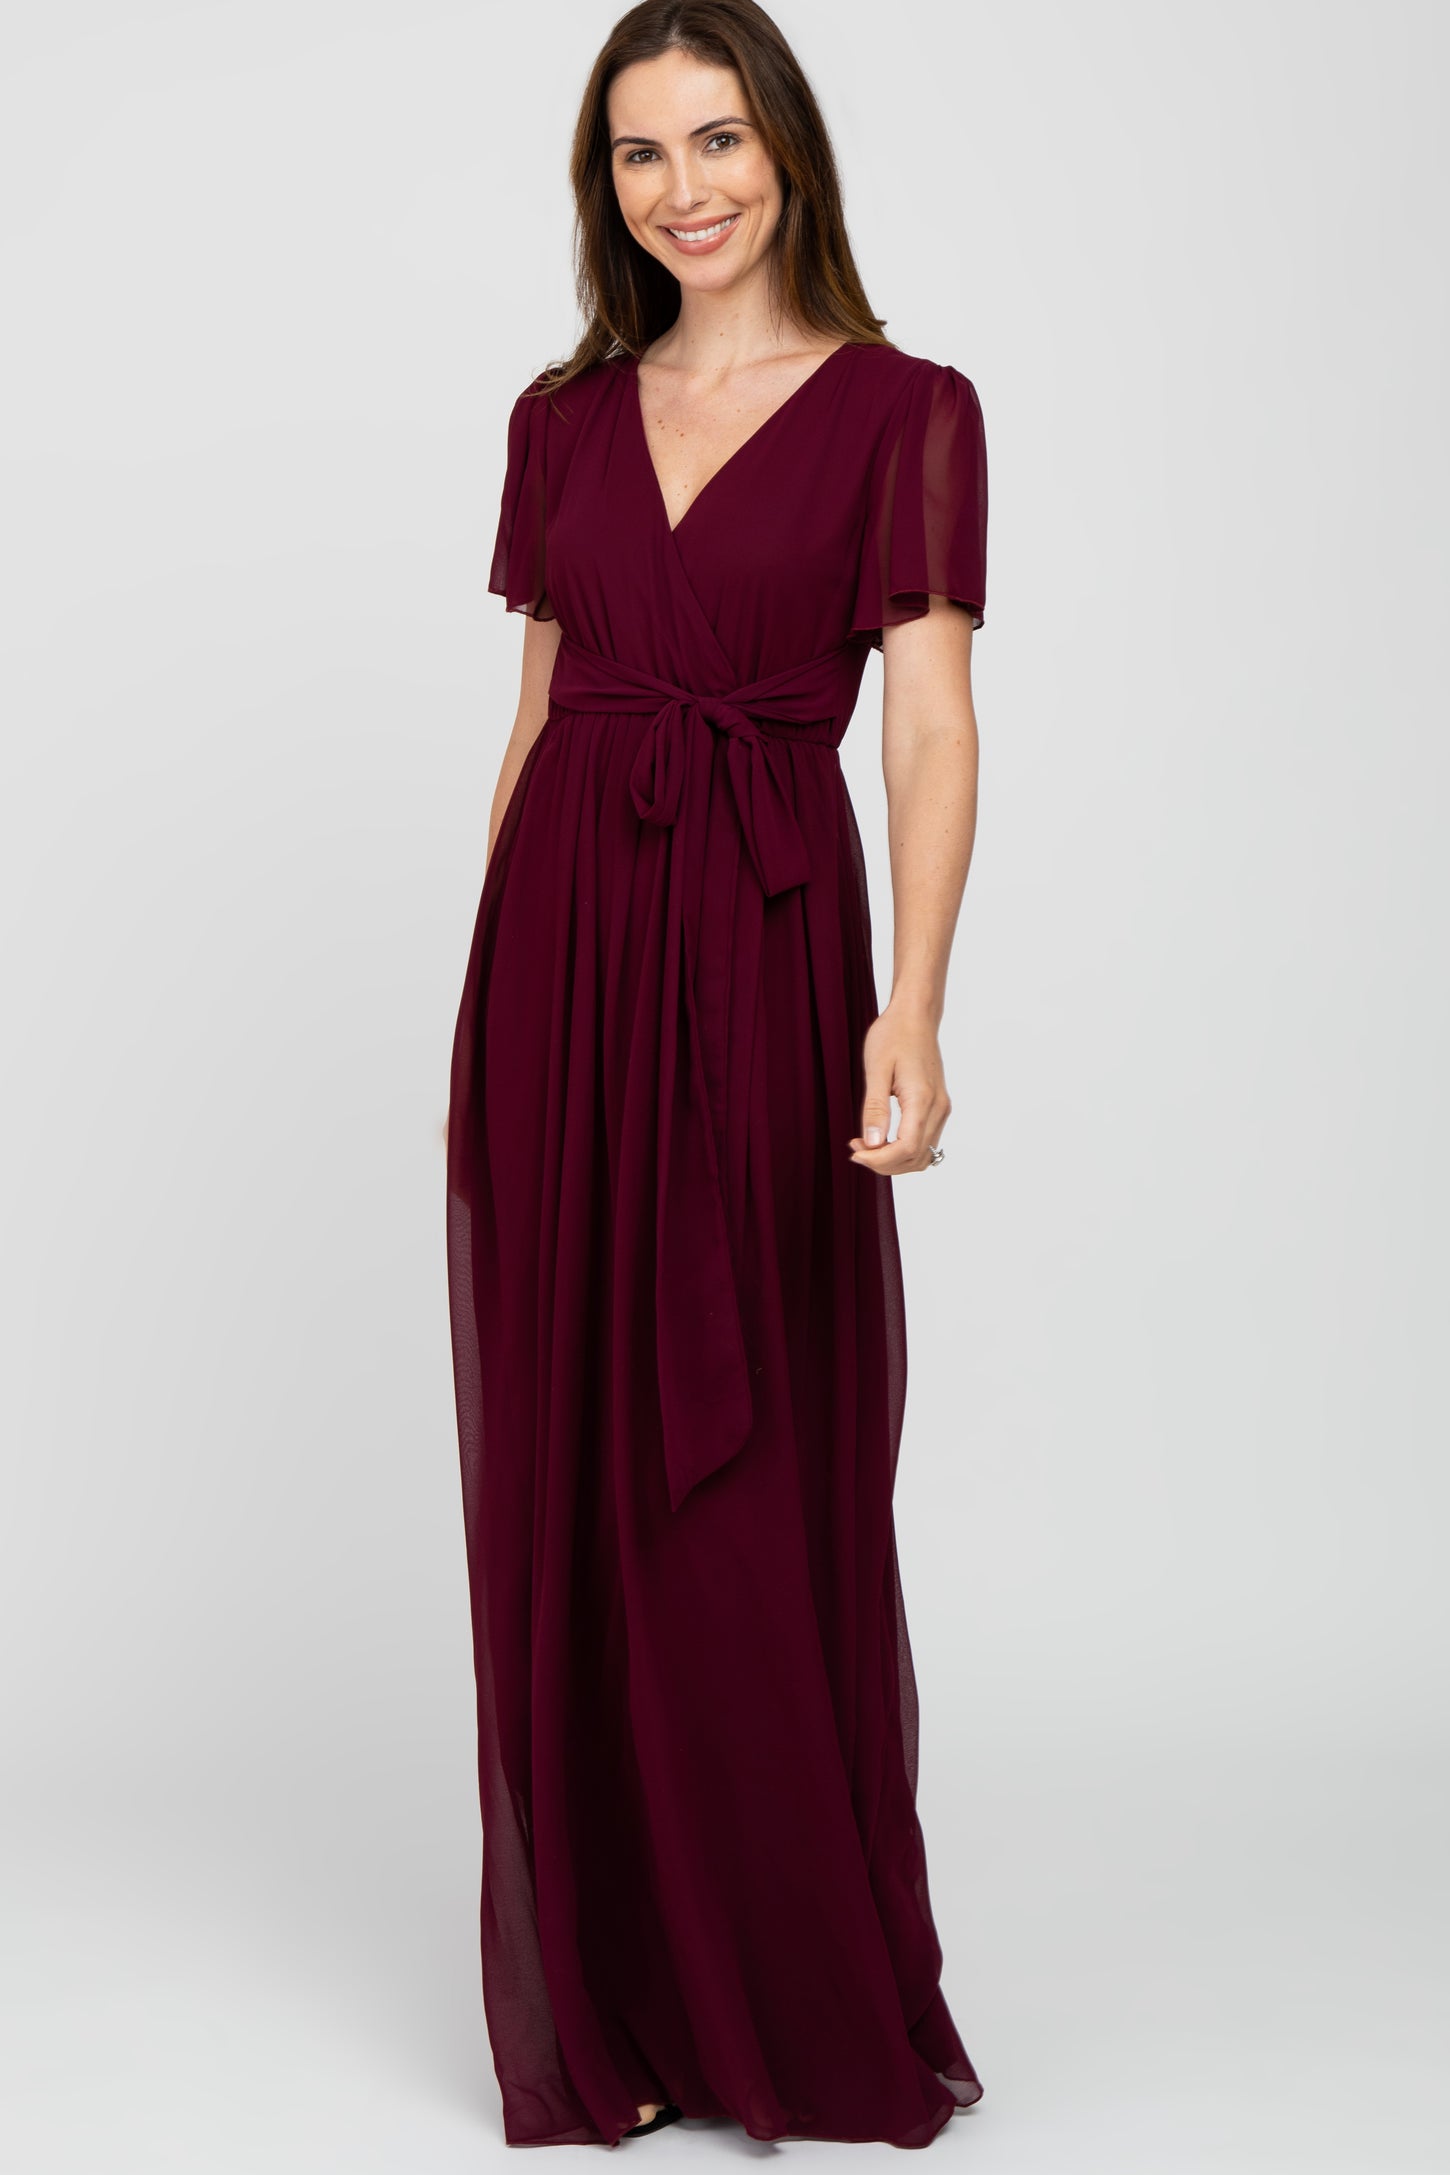 Burgundy Chiffon Short Sleeve Maternity Maxi Dress– PinkBlush